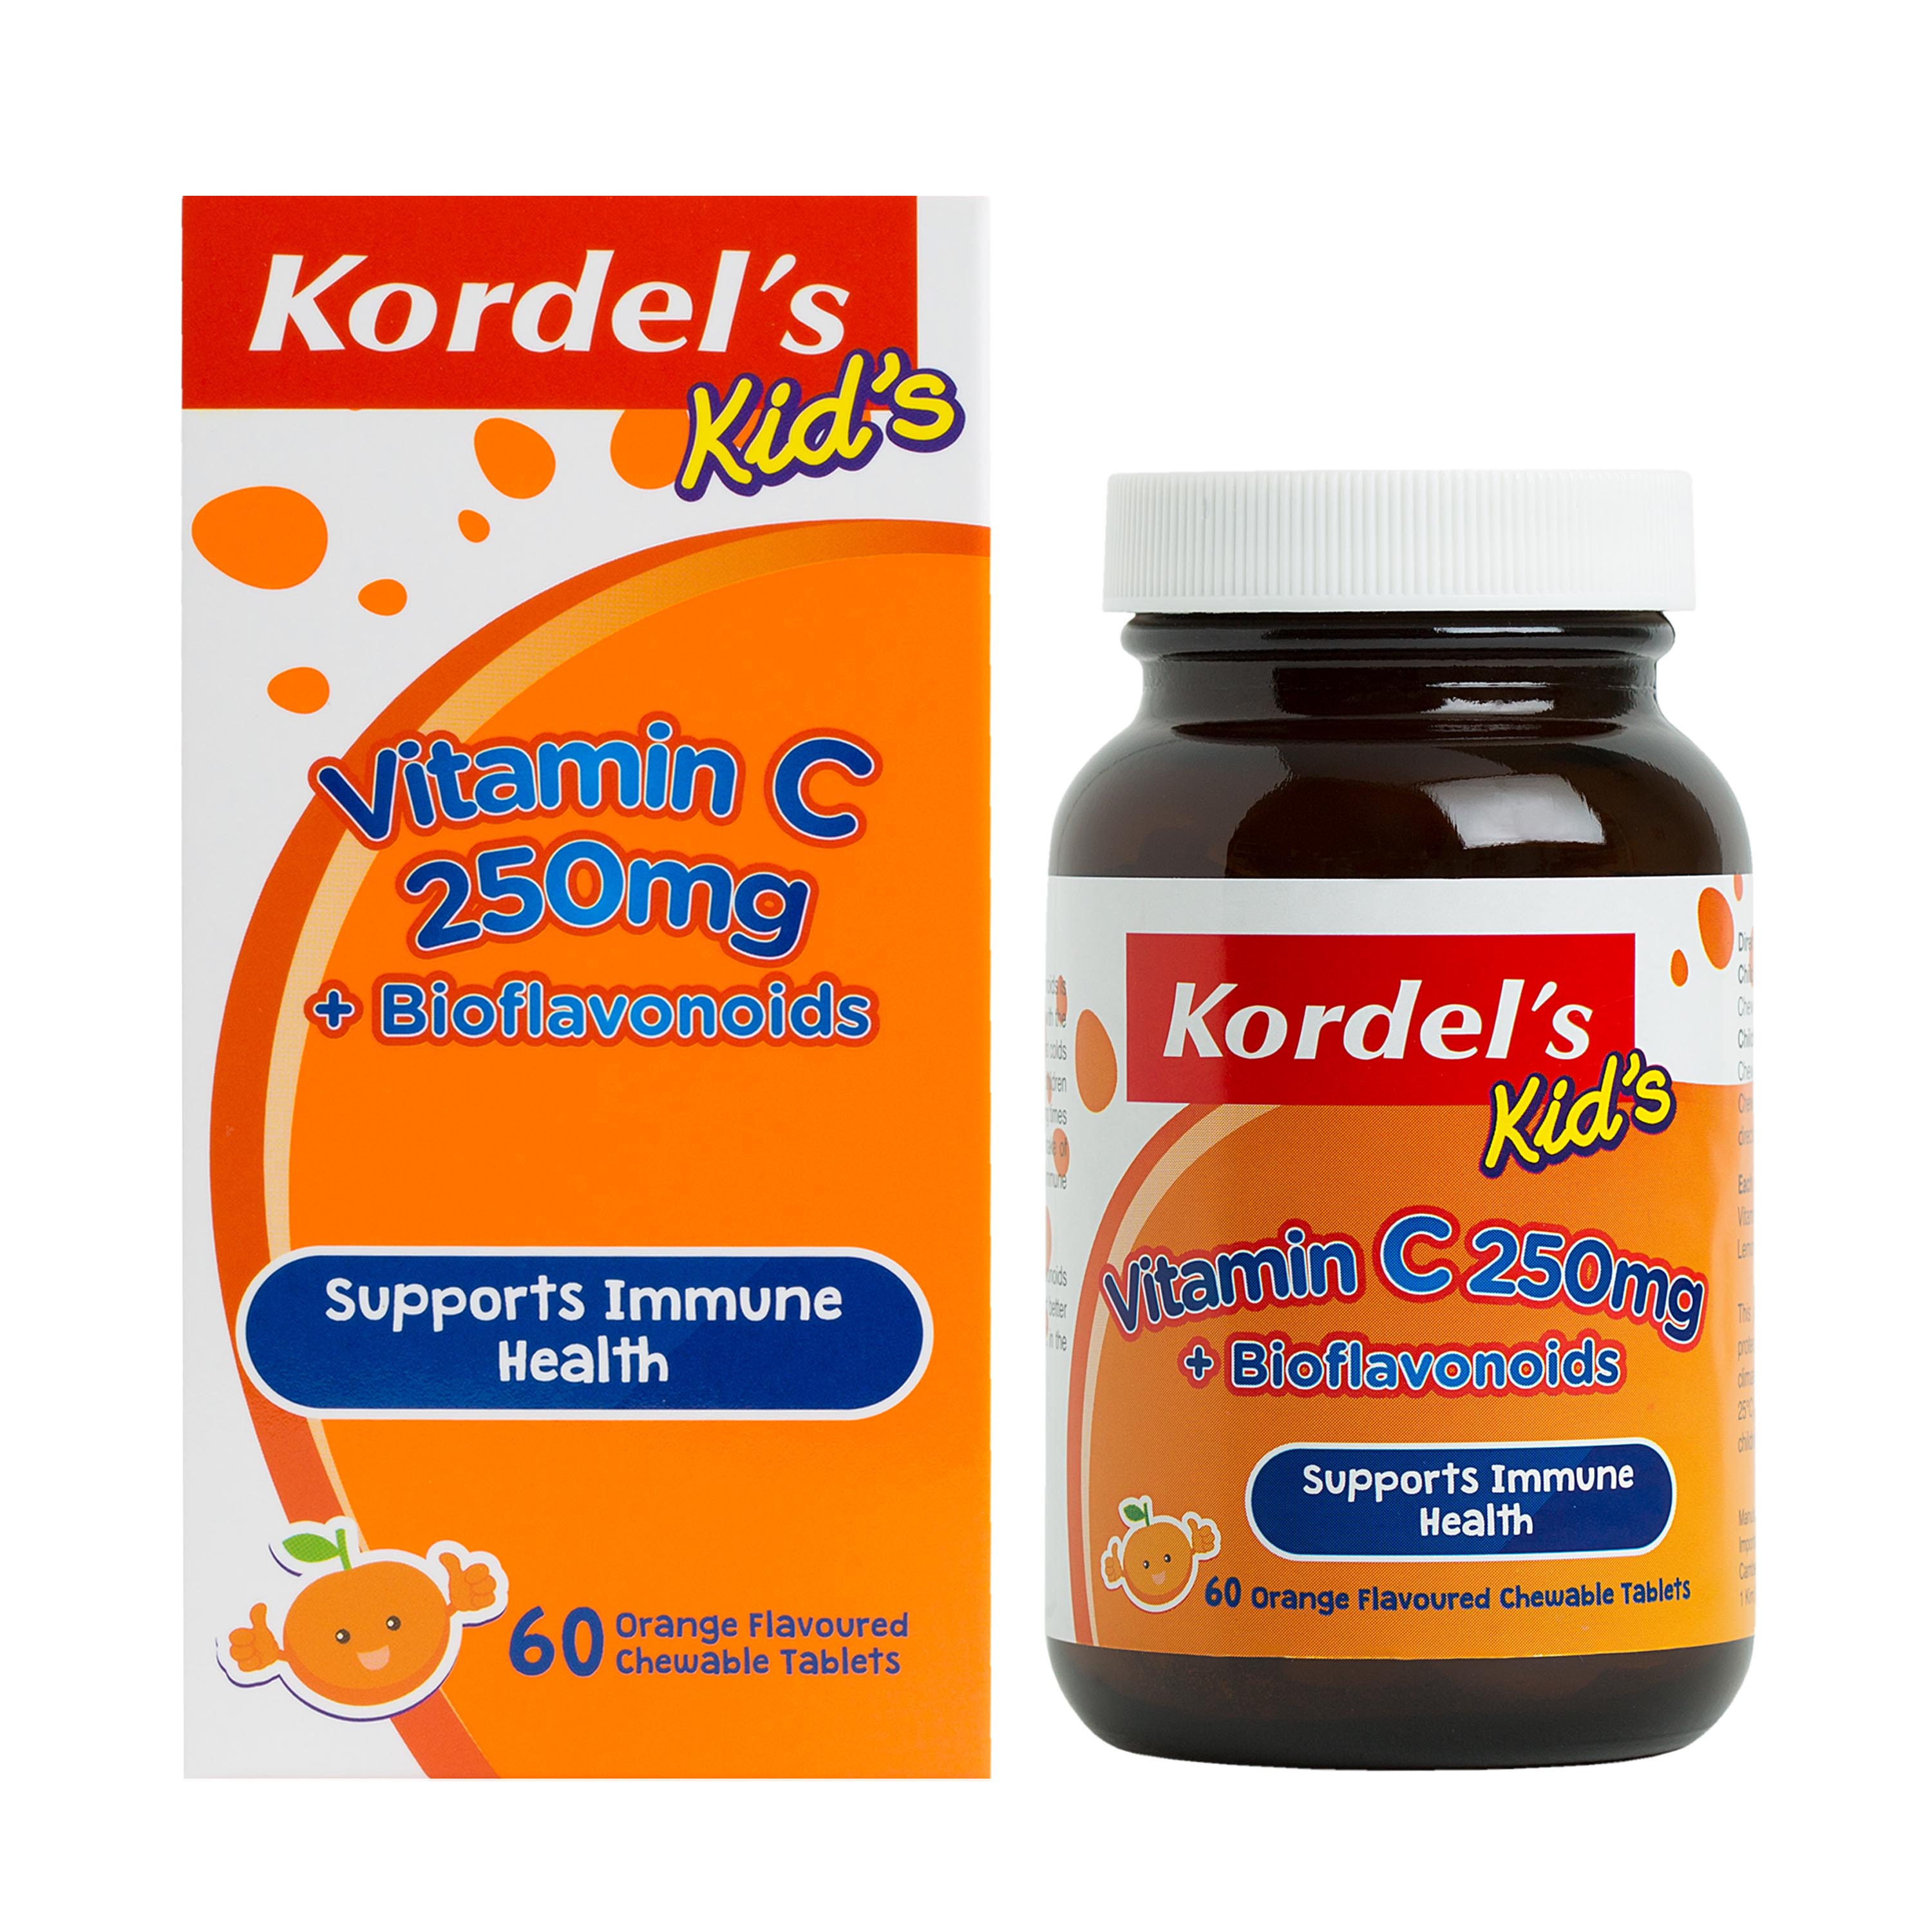 Kordel's Kid's Vitamin C 250 mg + Bioflavonoids 60 Chewable Tablets